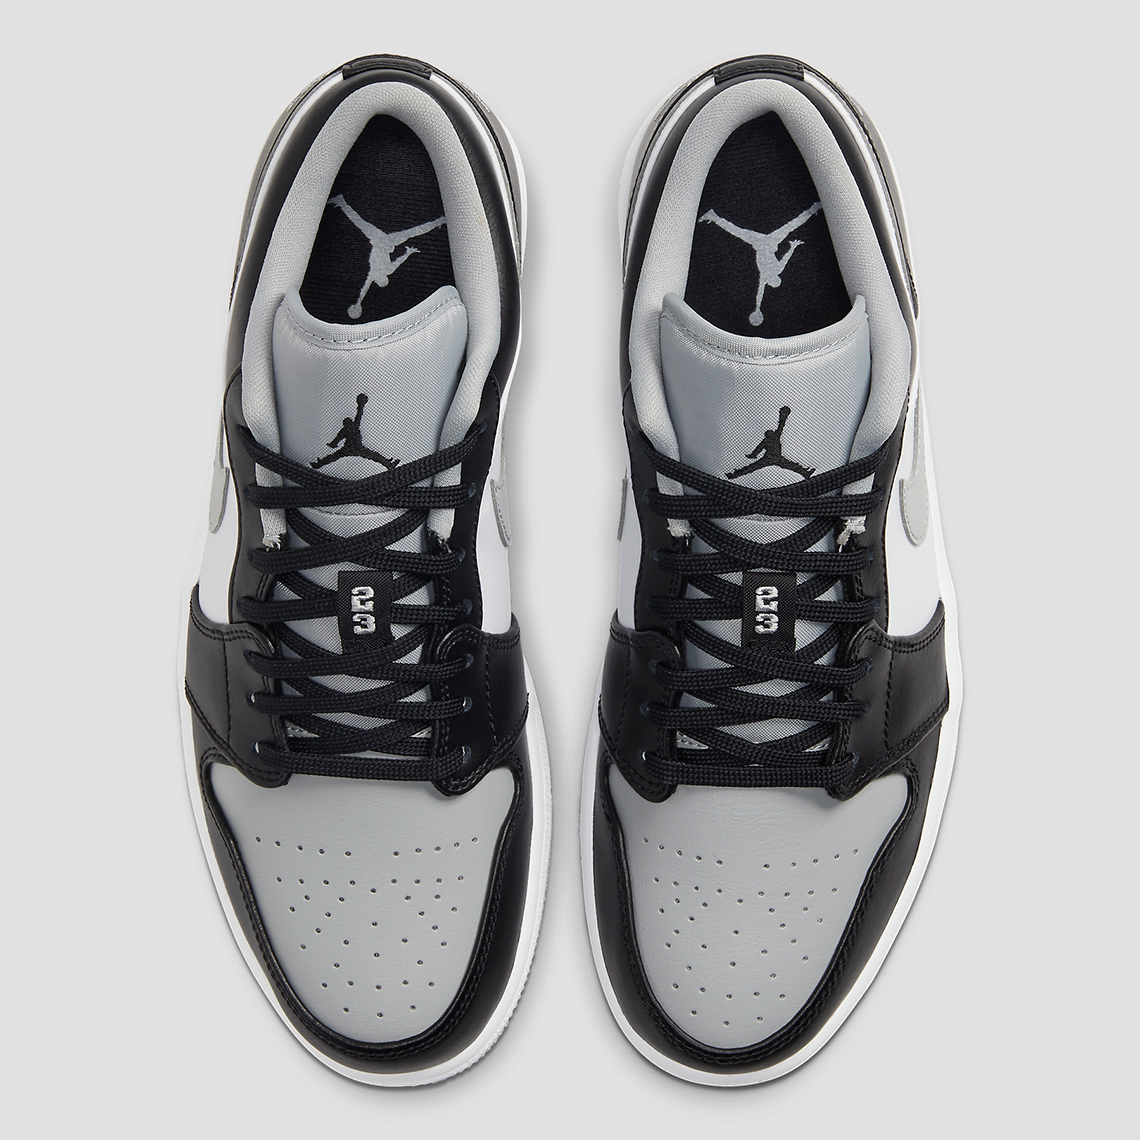 401 Release Date  Nike Air Jordan 1 Low Shadow Toe Light Smoke